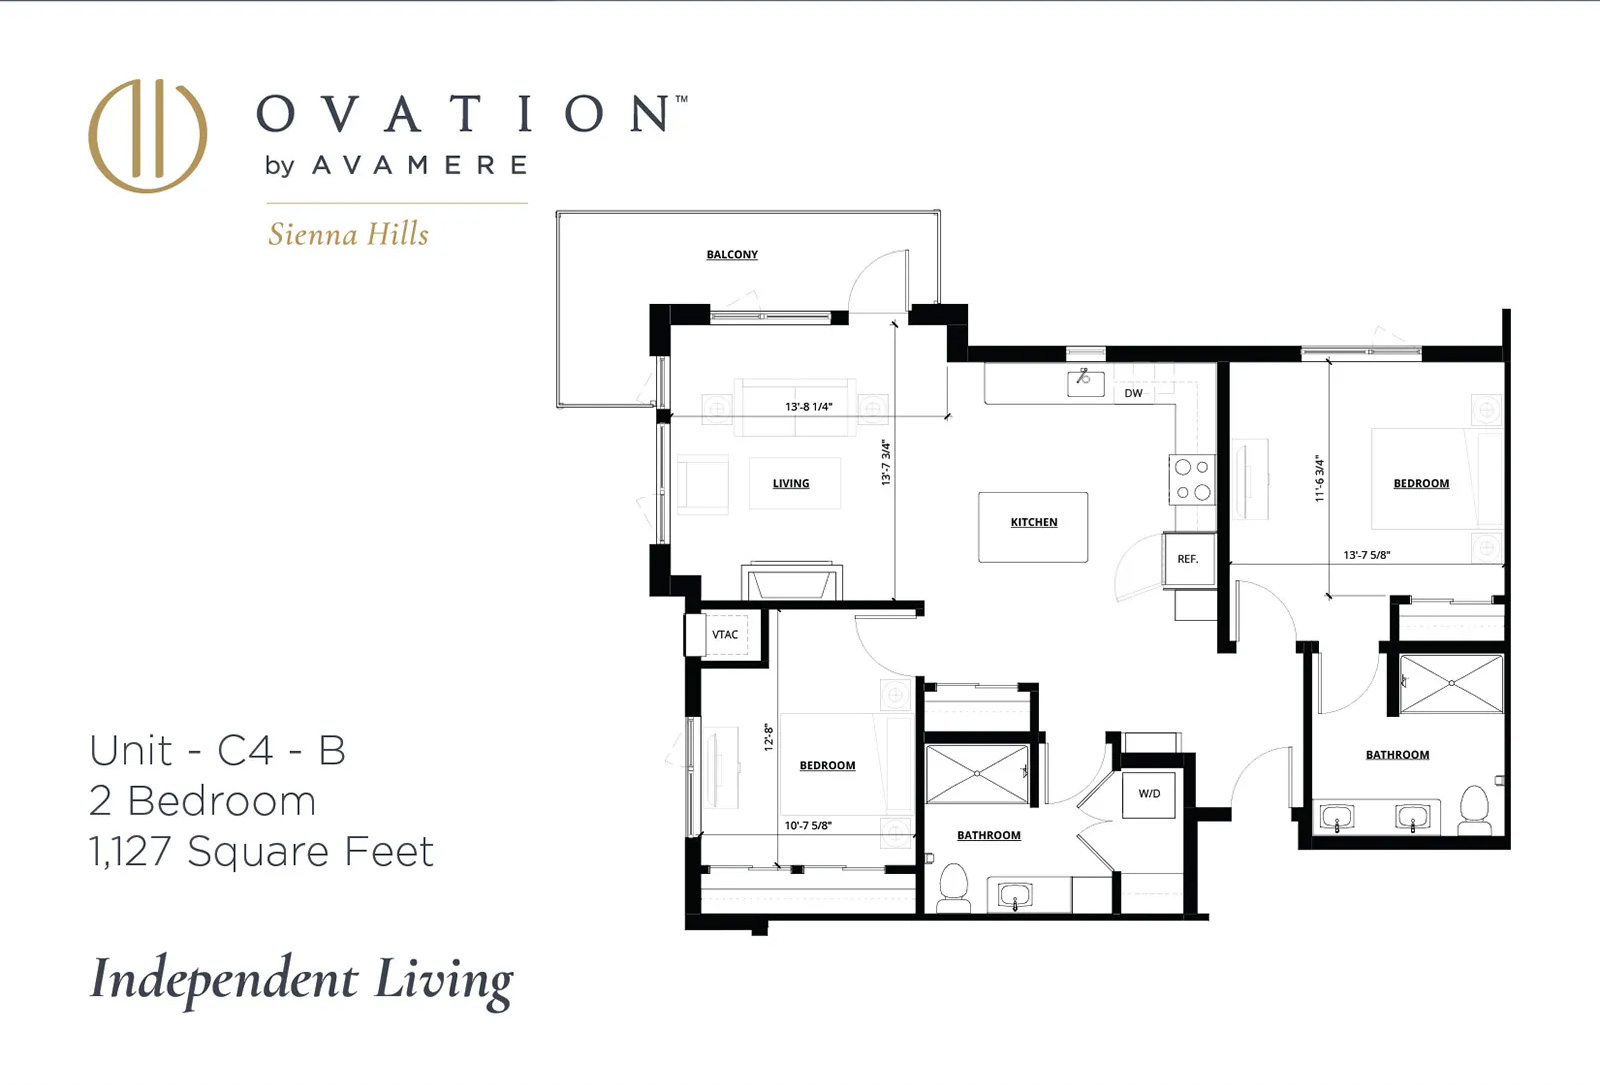 Ovation Sienna Hills Independent Living Floorplan 2 Bedroom 1127 sq ft